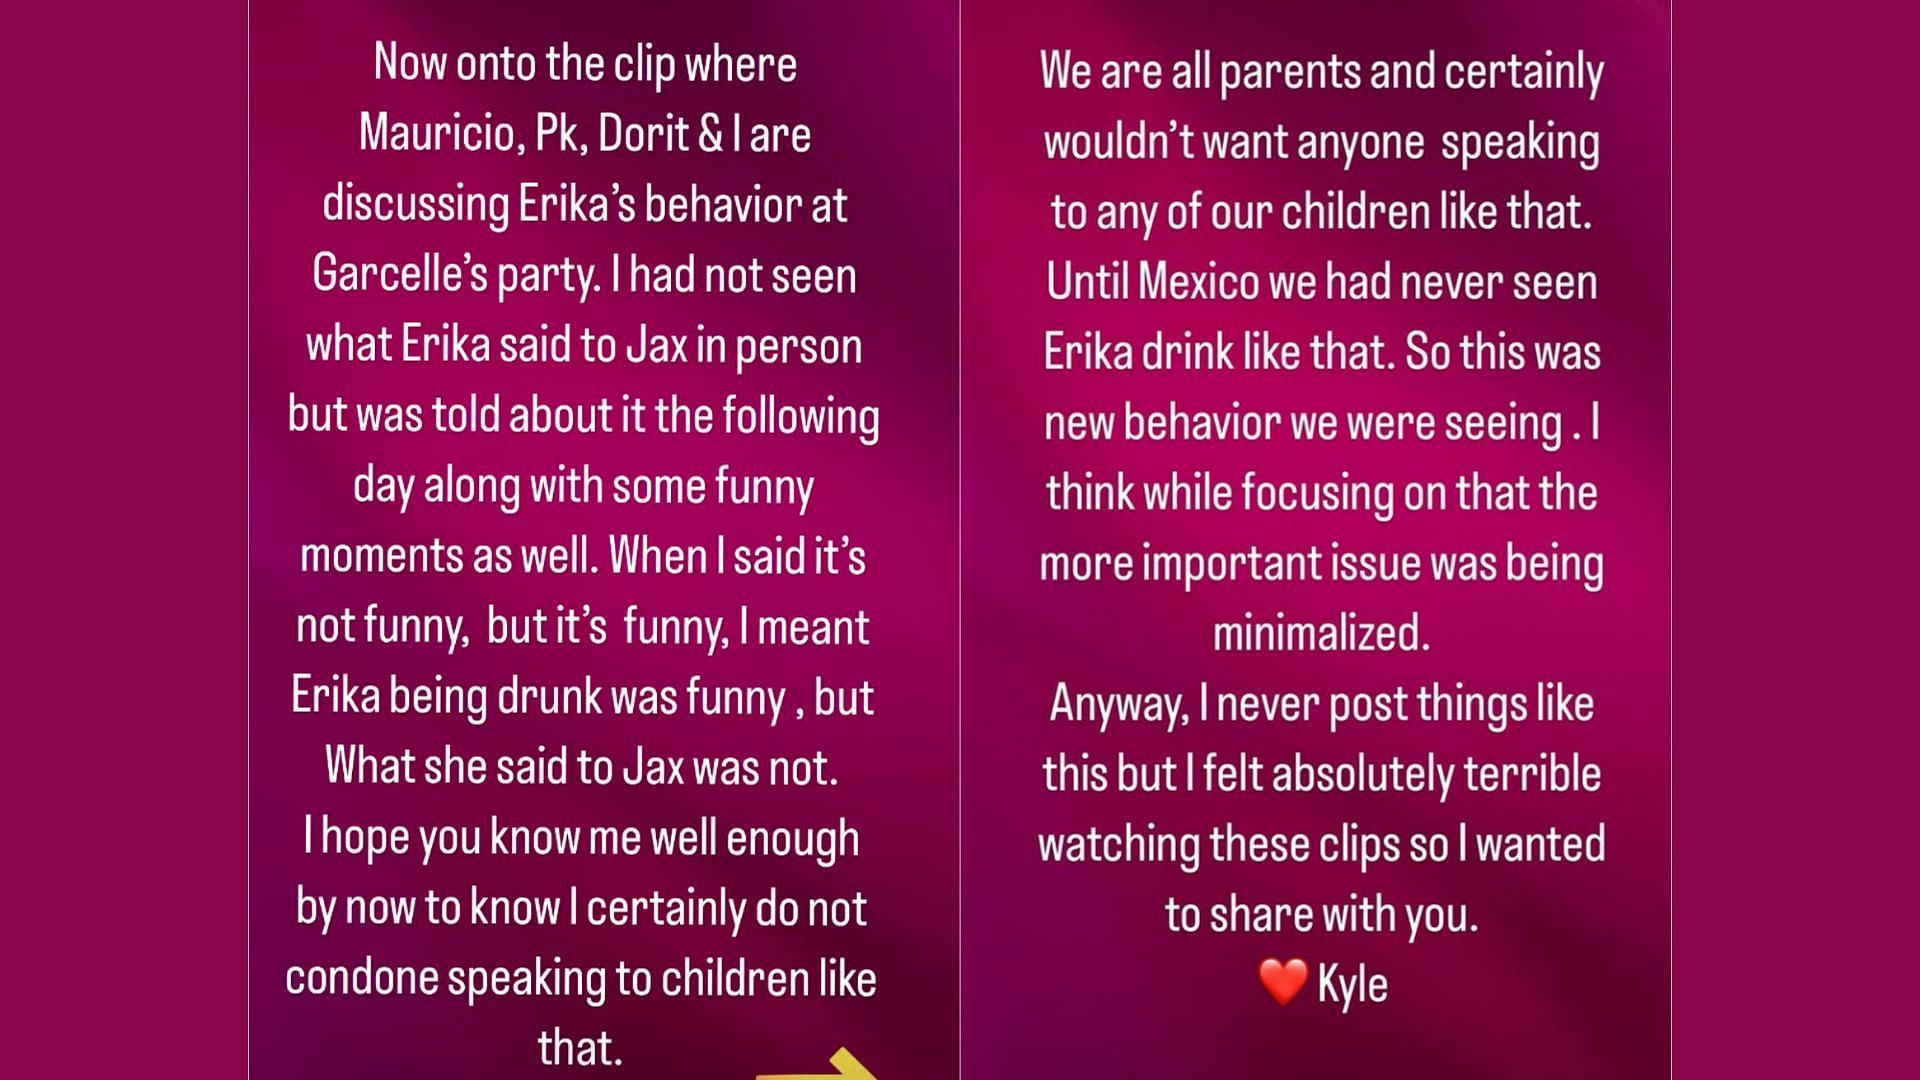 Kyle Richards&#039; Instagram story addressing her reaction to Erika Jayne and Jax&#039;s scene (Image via kylerichards18/Instagram)